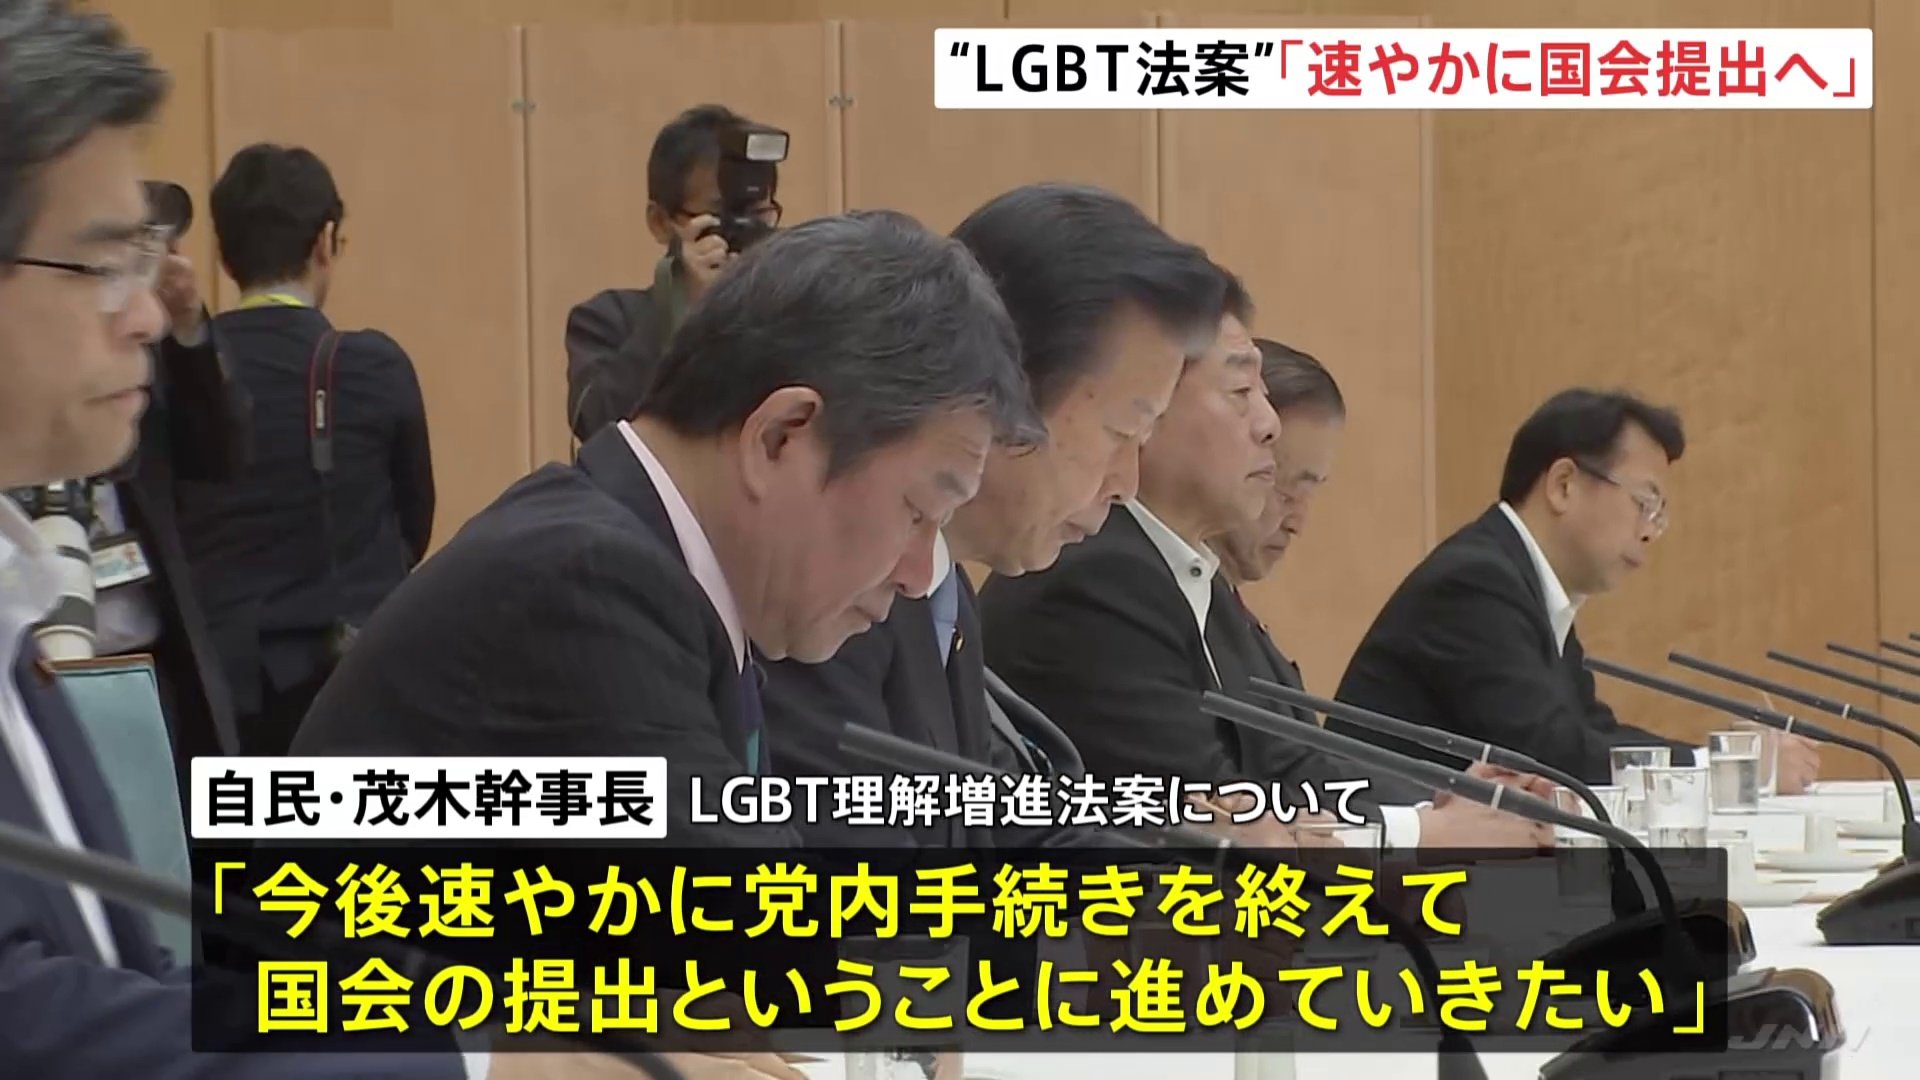 LGBT理解増進法案、自民・茂木幹事長「速やかに手続きを」 G7広島サミット前に法案提出を目指す